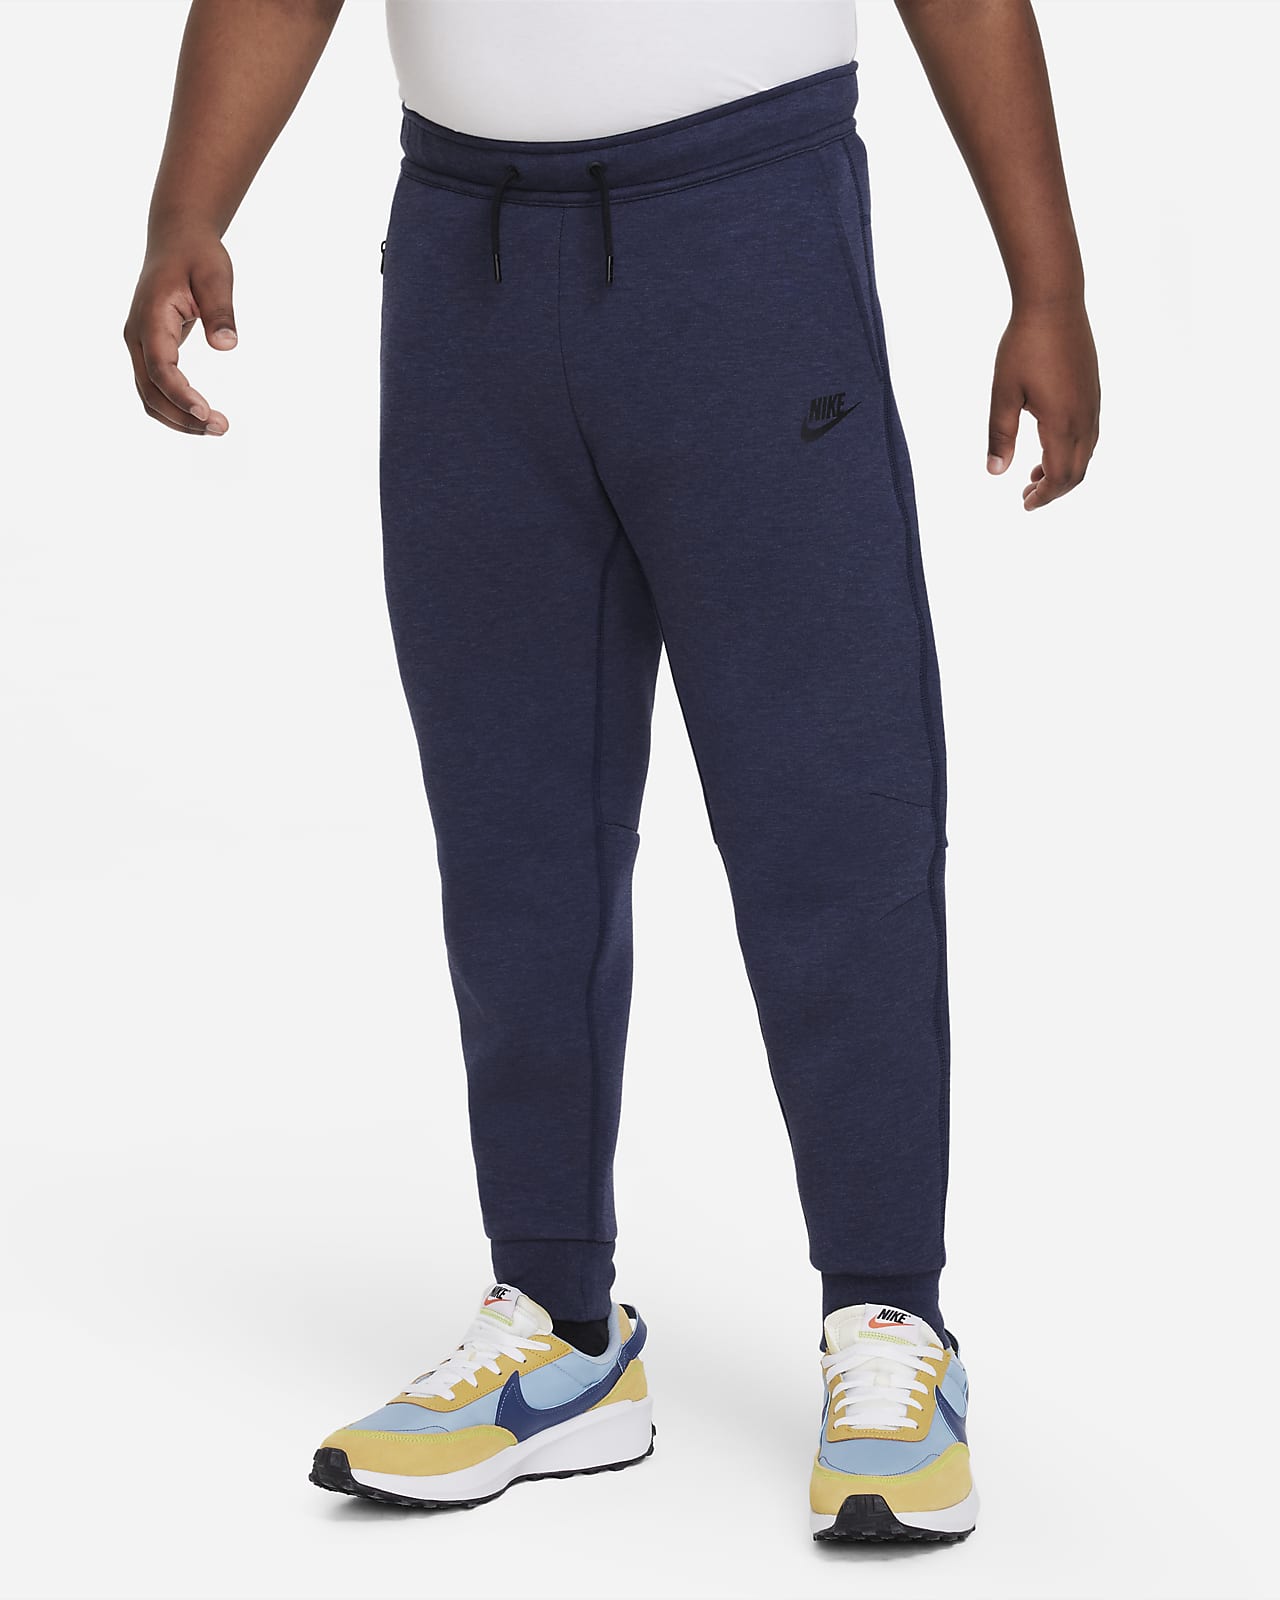 Pantalon Nike Sportswear Tech Fleece pour Garçon plus âgé (taille élargie)